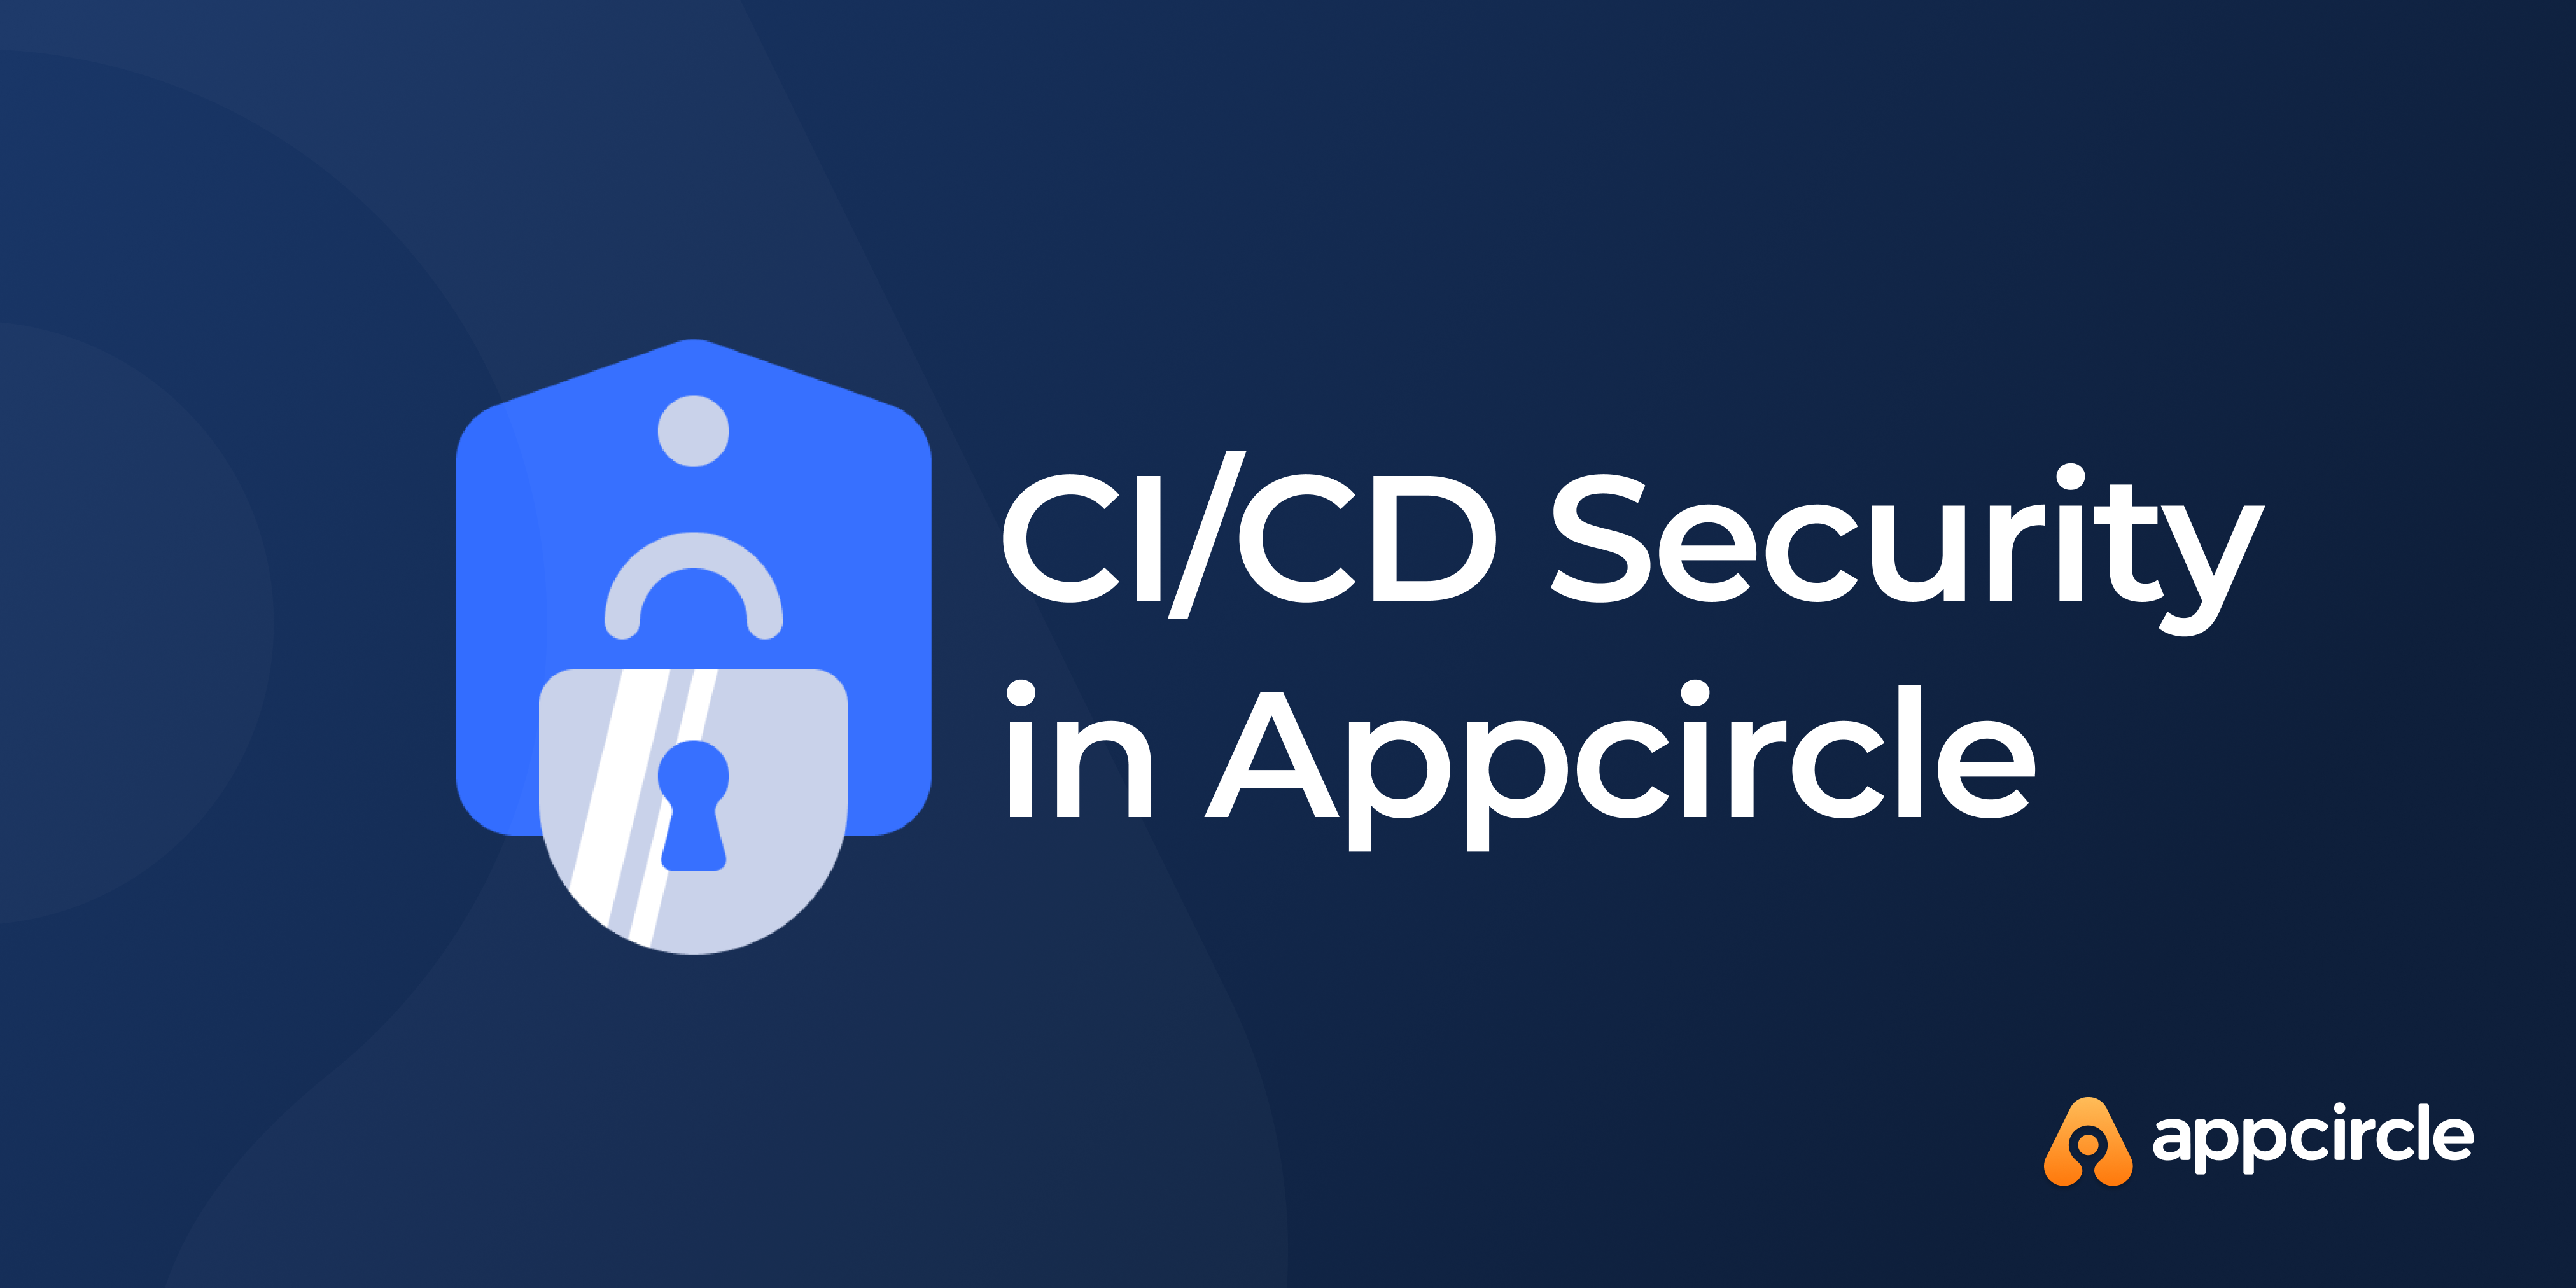 CI/CD Security in Appcircle